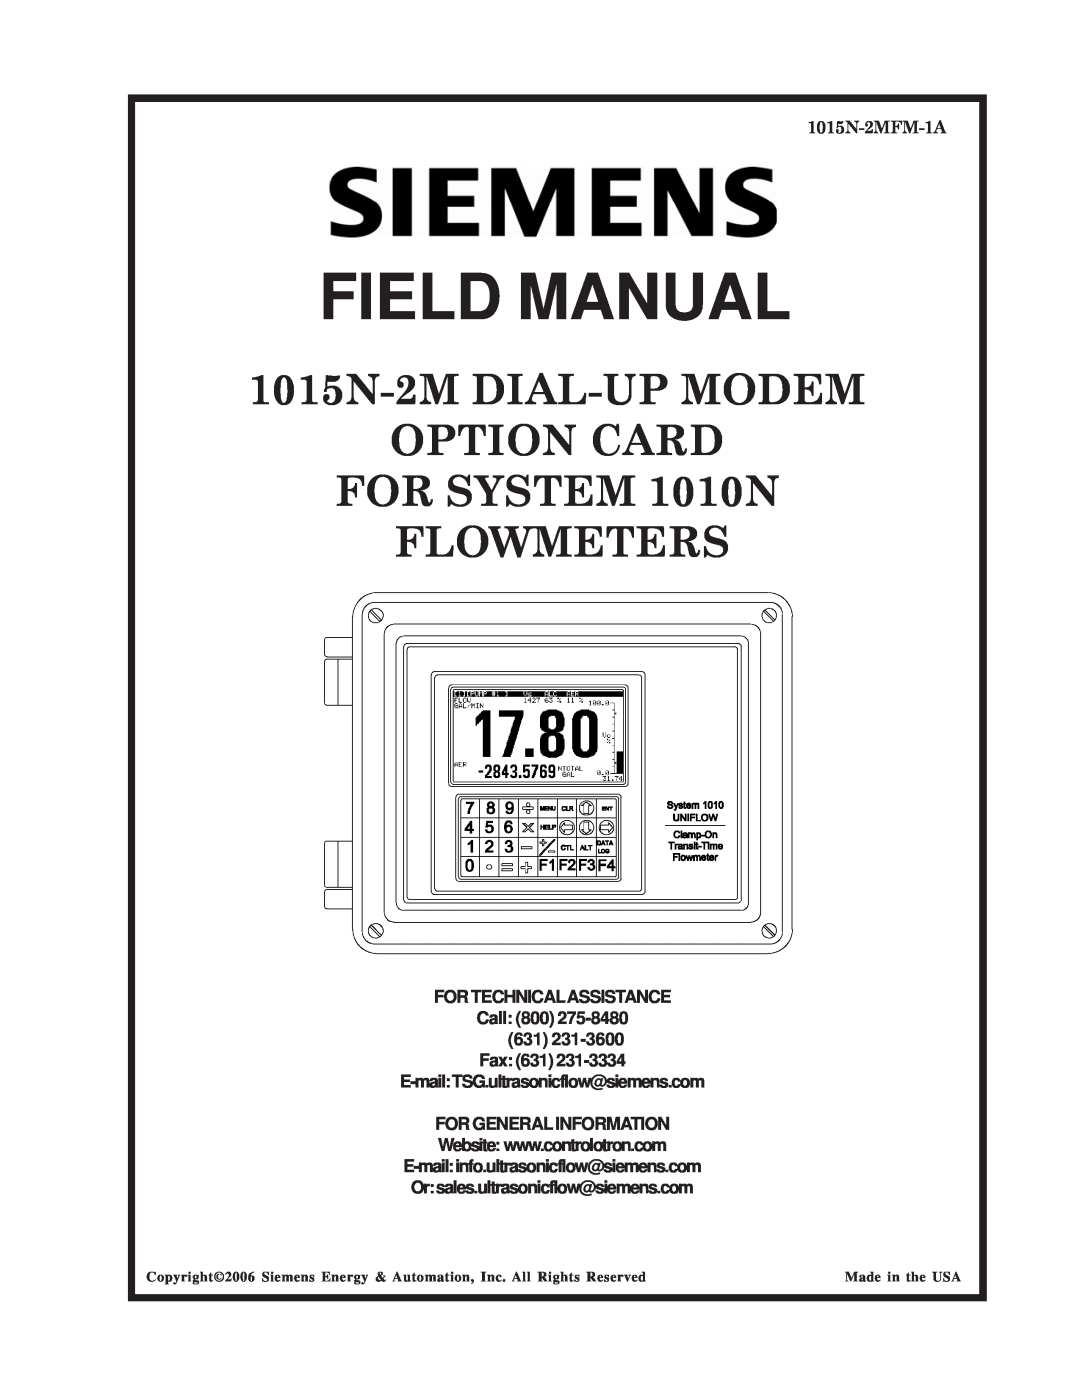 Siemens 1015N-2MFM-1A manual 1015N-2M DIAL-UP MODEM, Option Card, FOR SYSTEM 1010N, Flowmeters, Field Manual, Call 800 